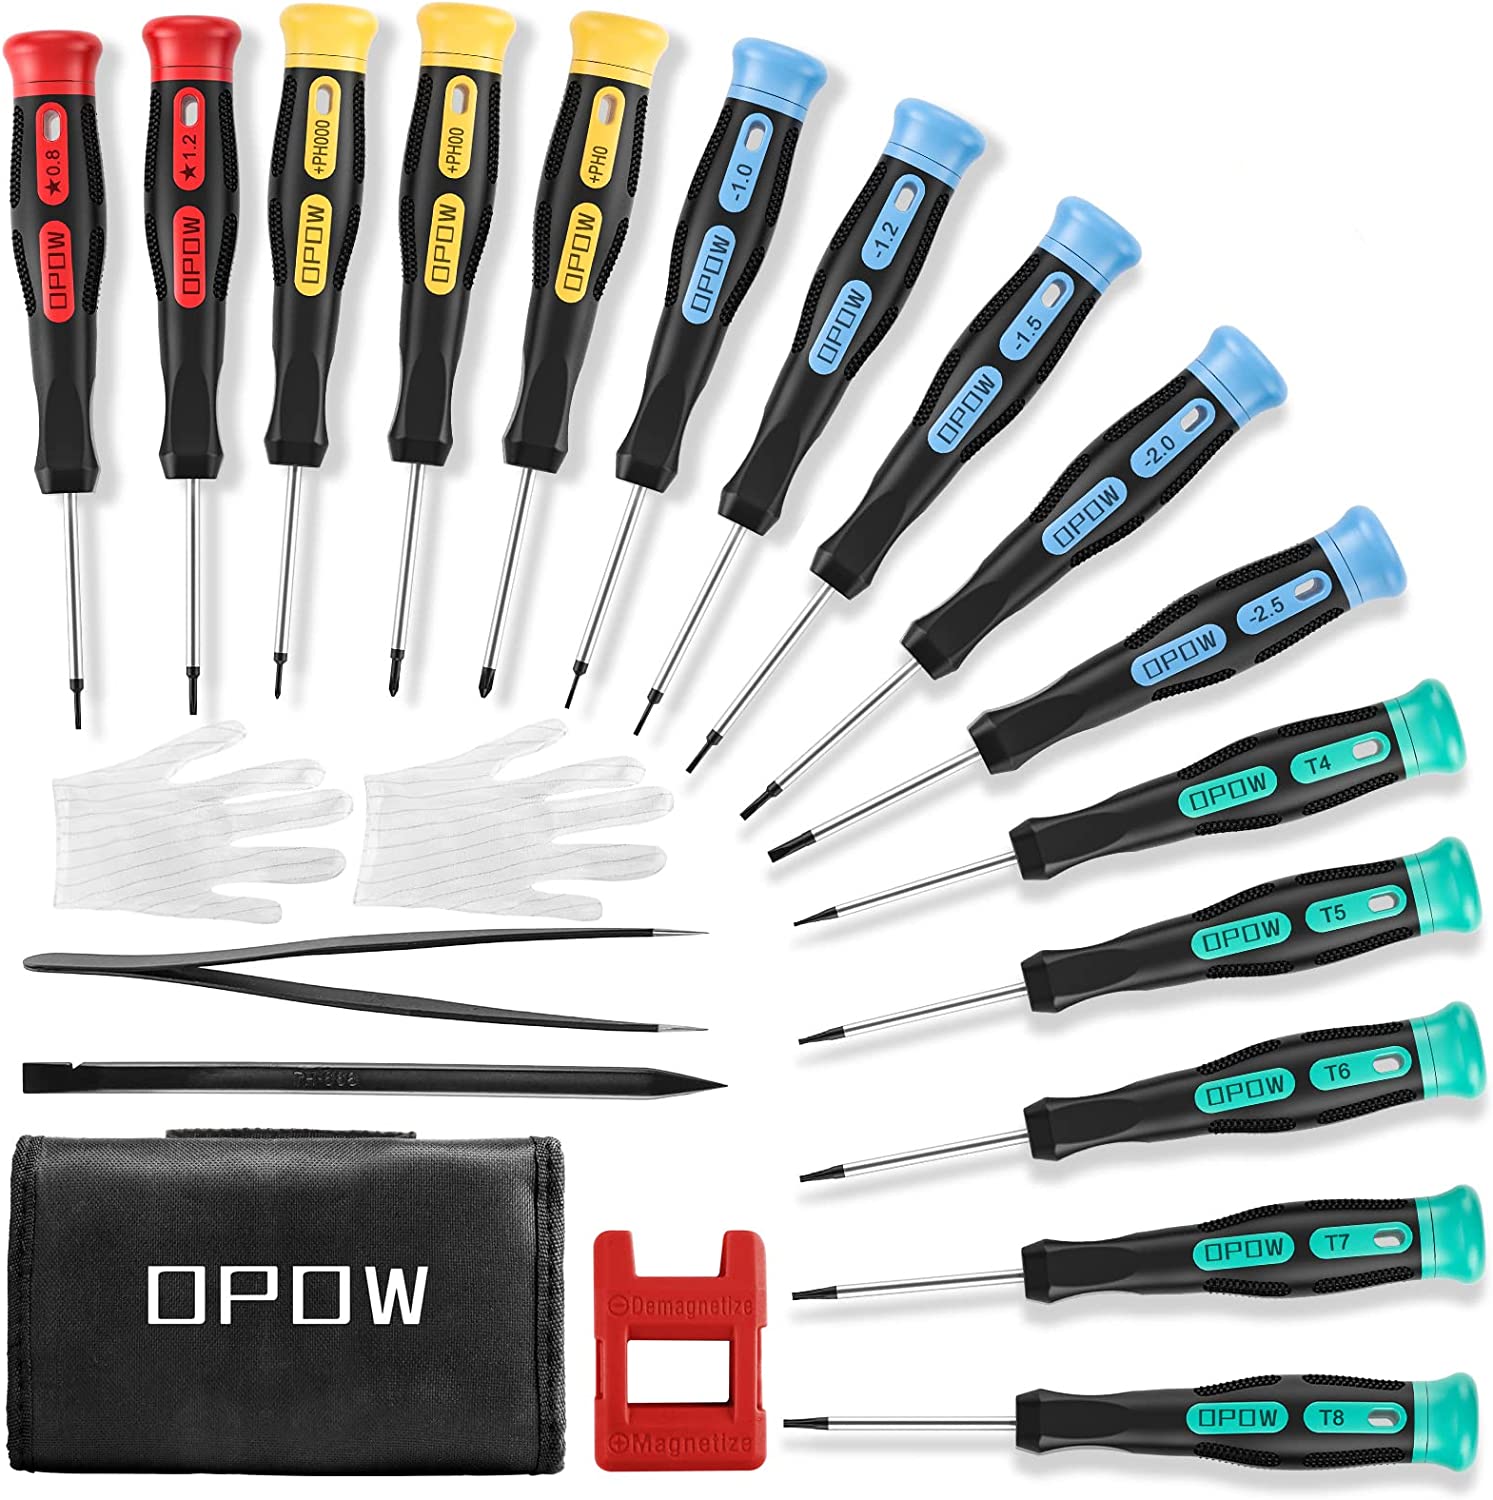 Amazon types of screwdrivers jewelers screwdrivers